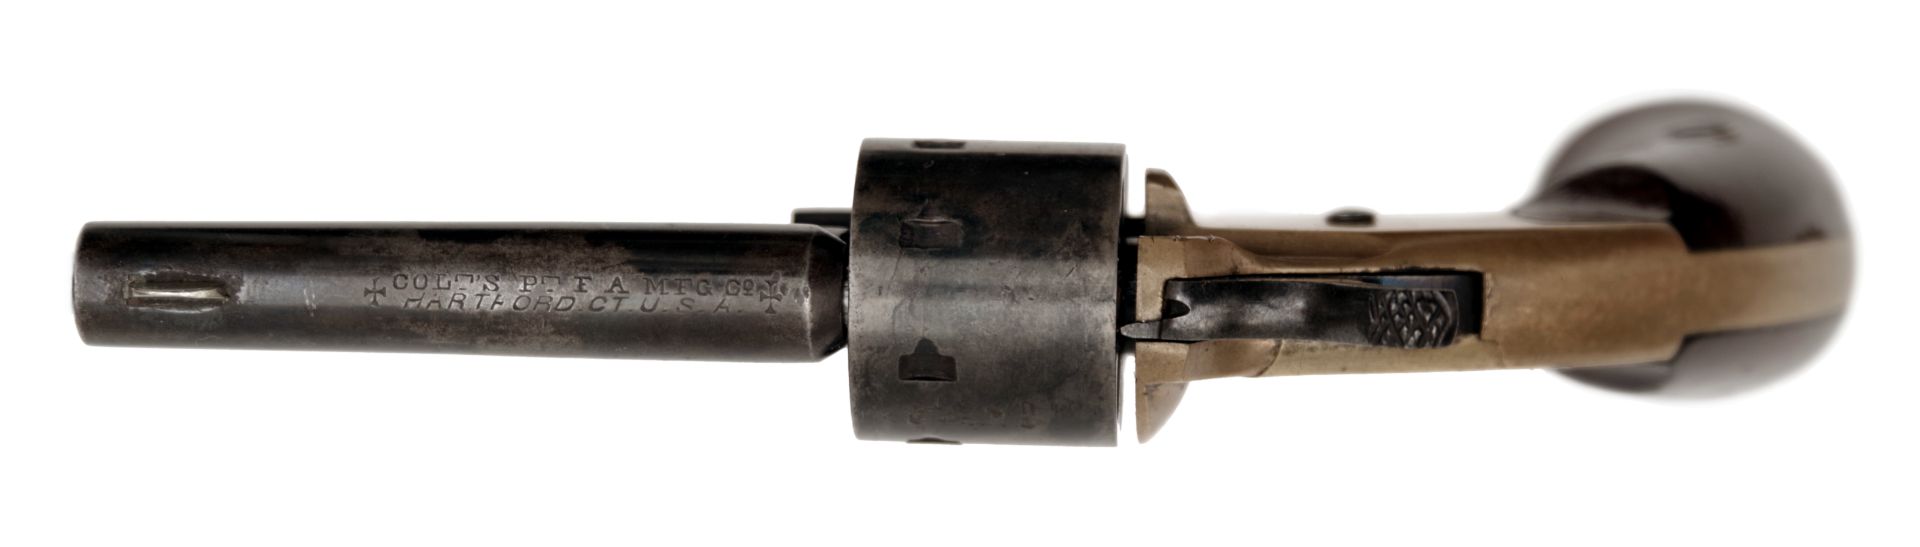 A Colt Open Top Pocket Model Revolver - Image 3 of 3